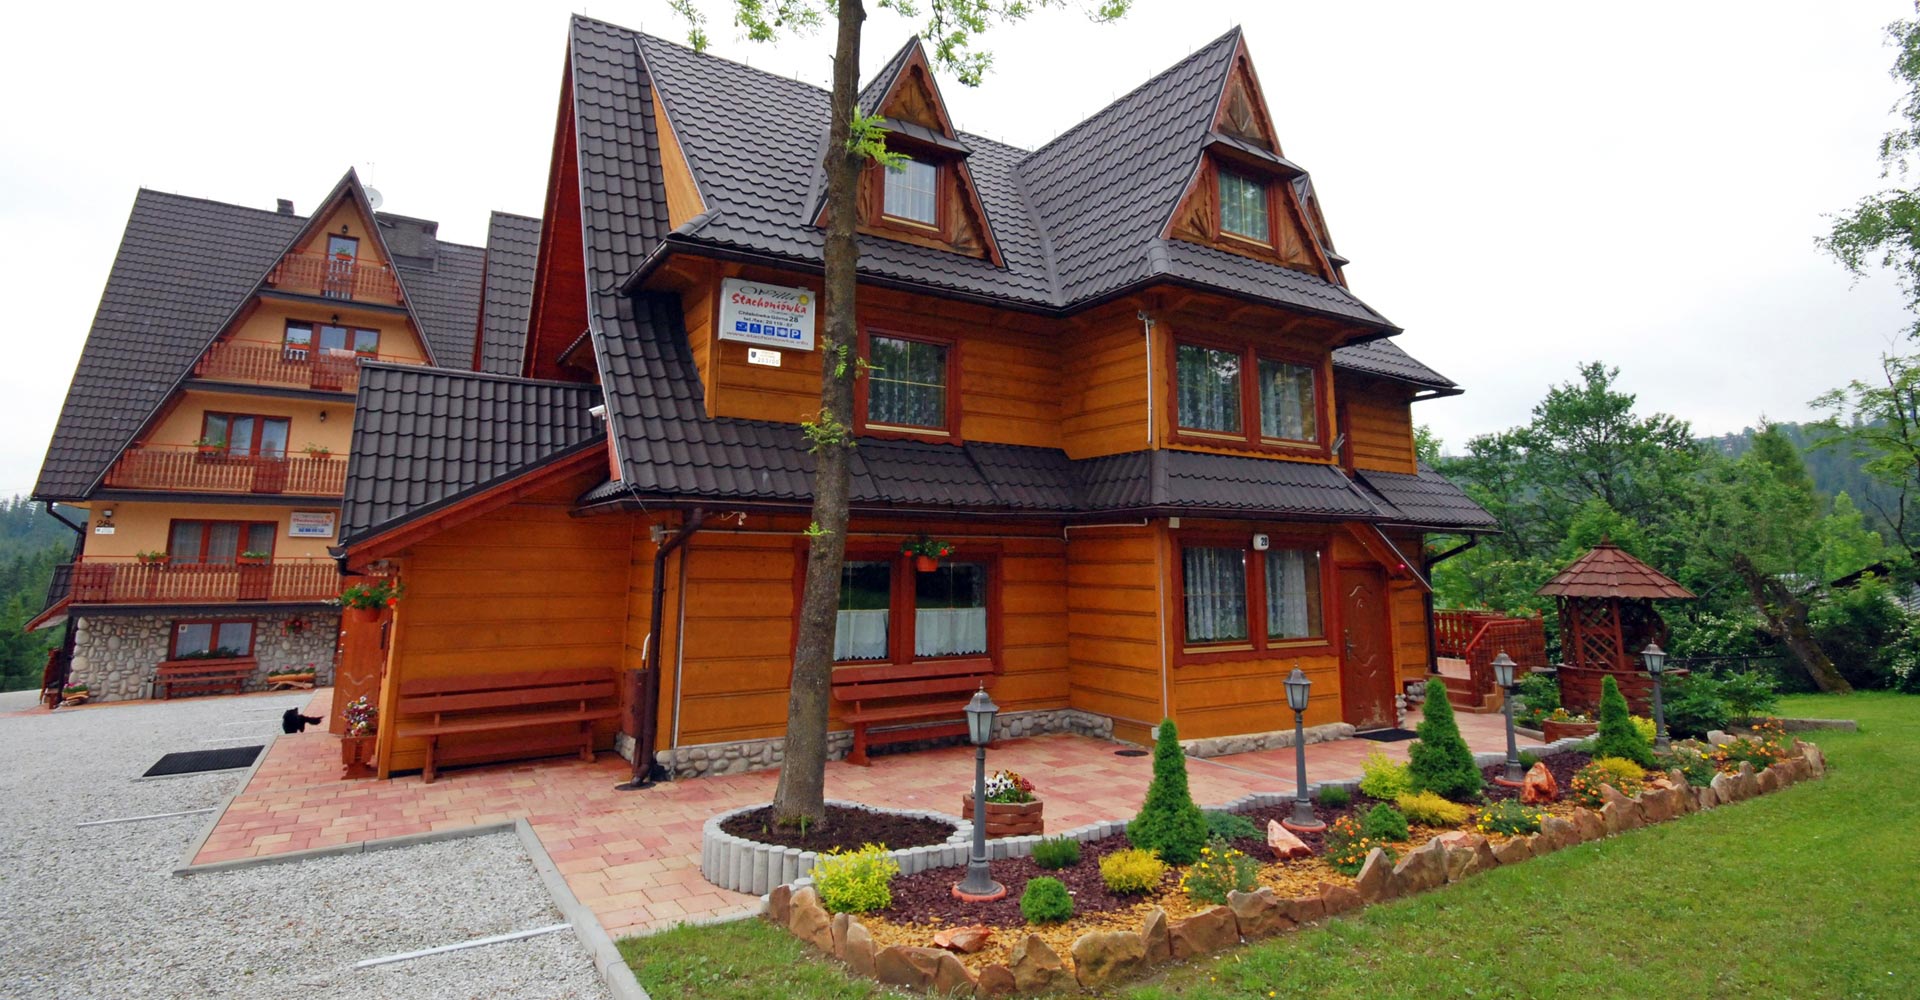 Villa Unterkünfte in Zakopane Räume ins Tatra Gebirge Erholung in Polen